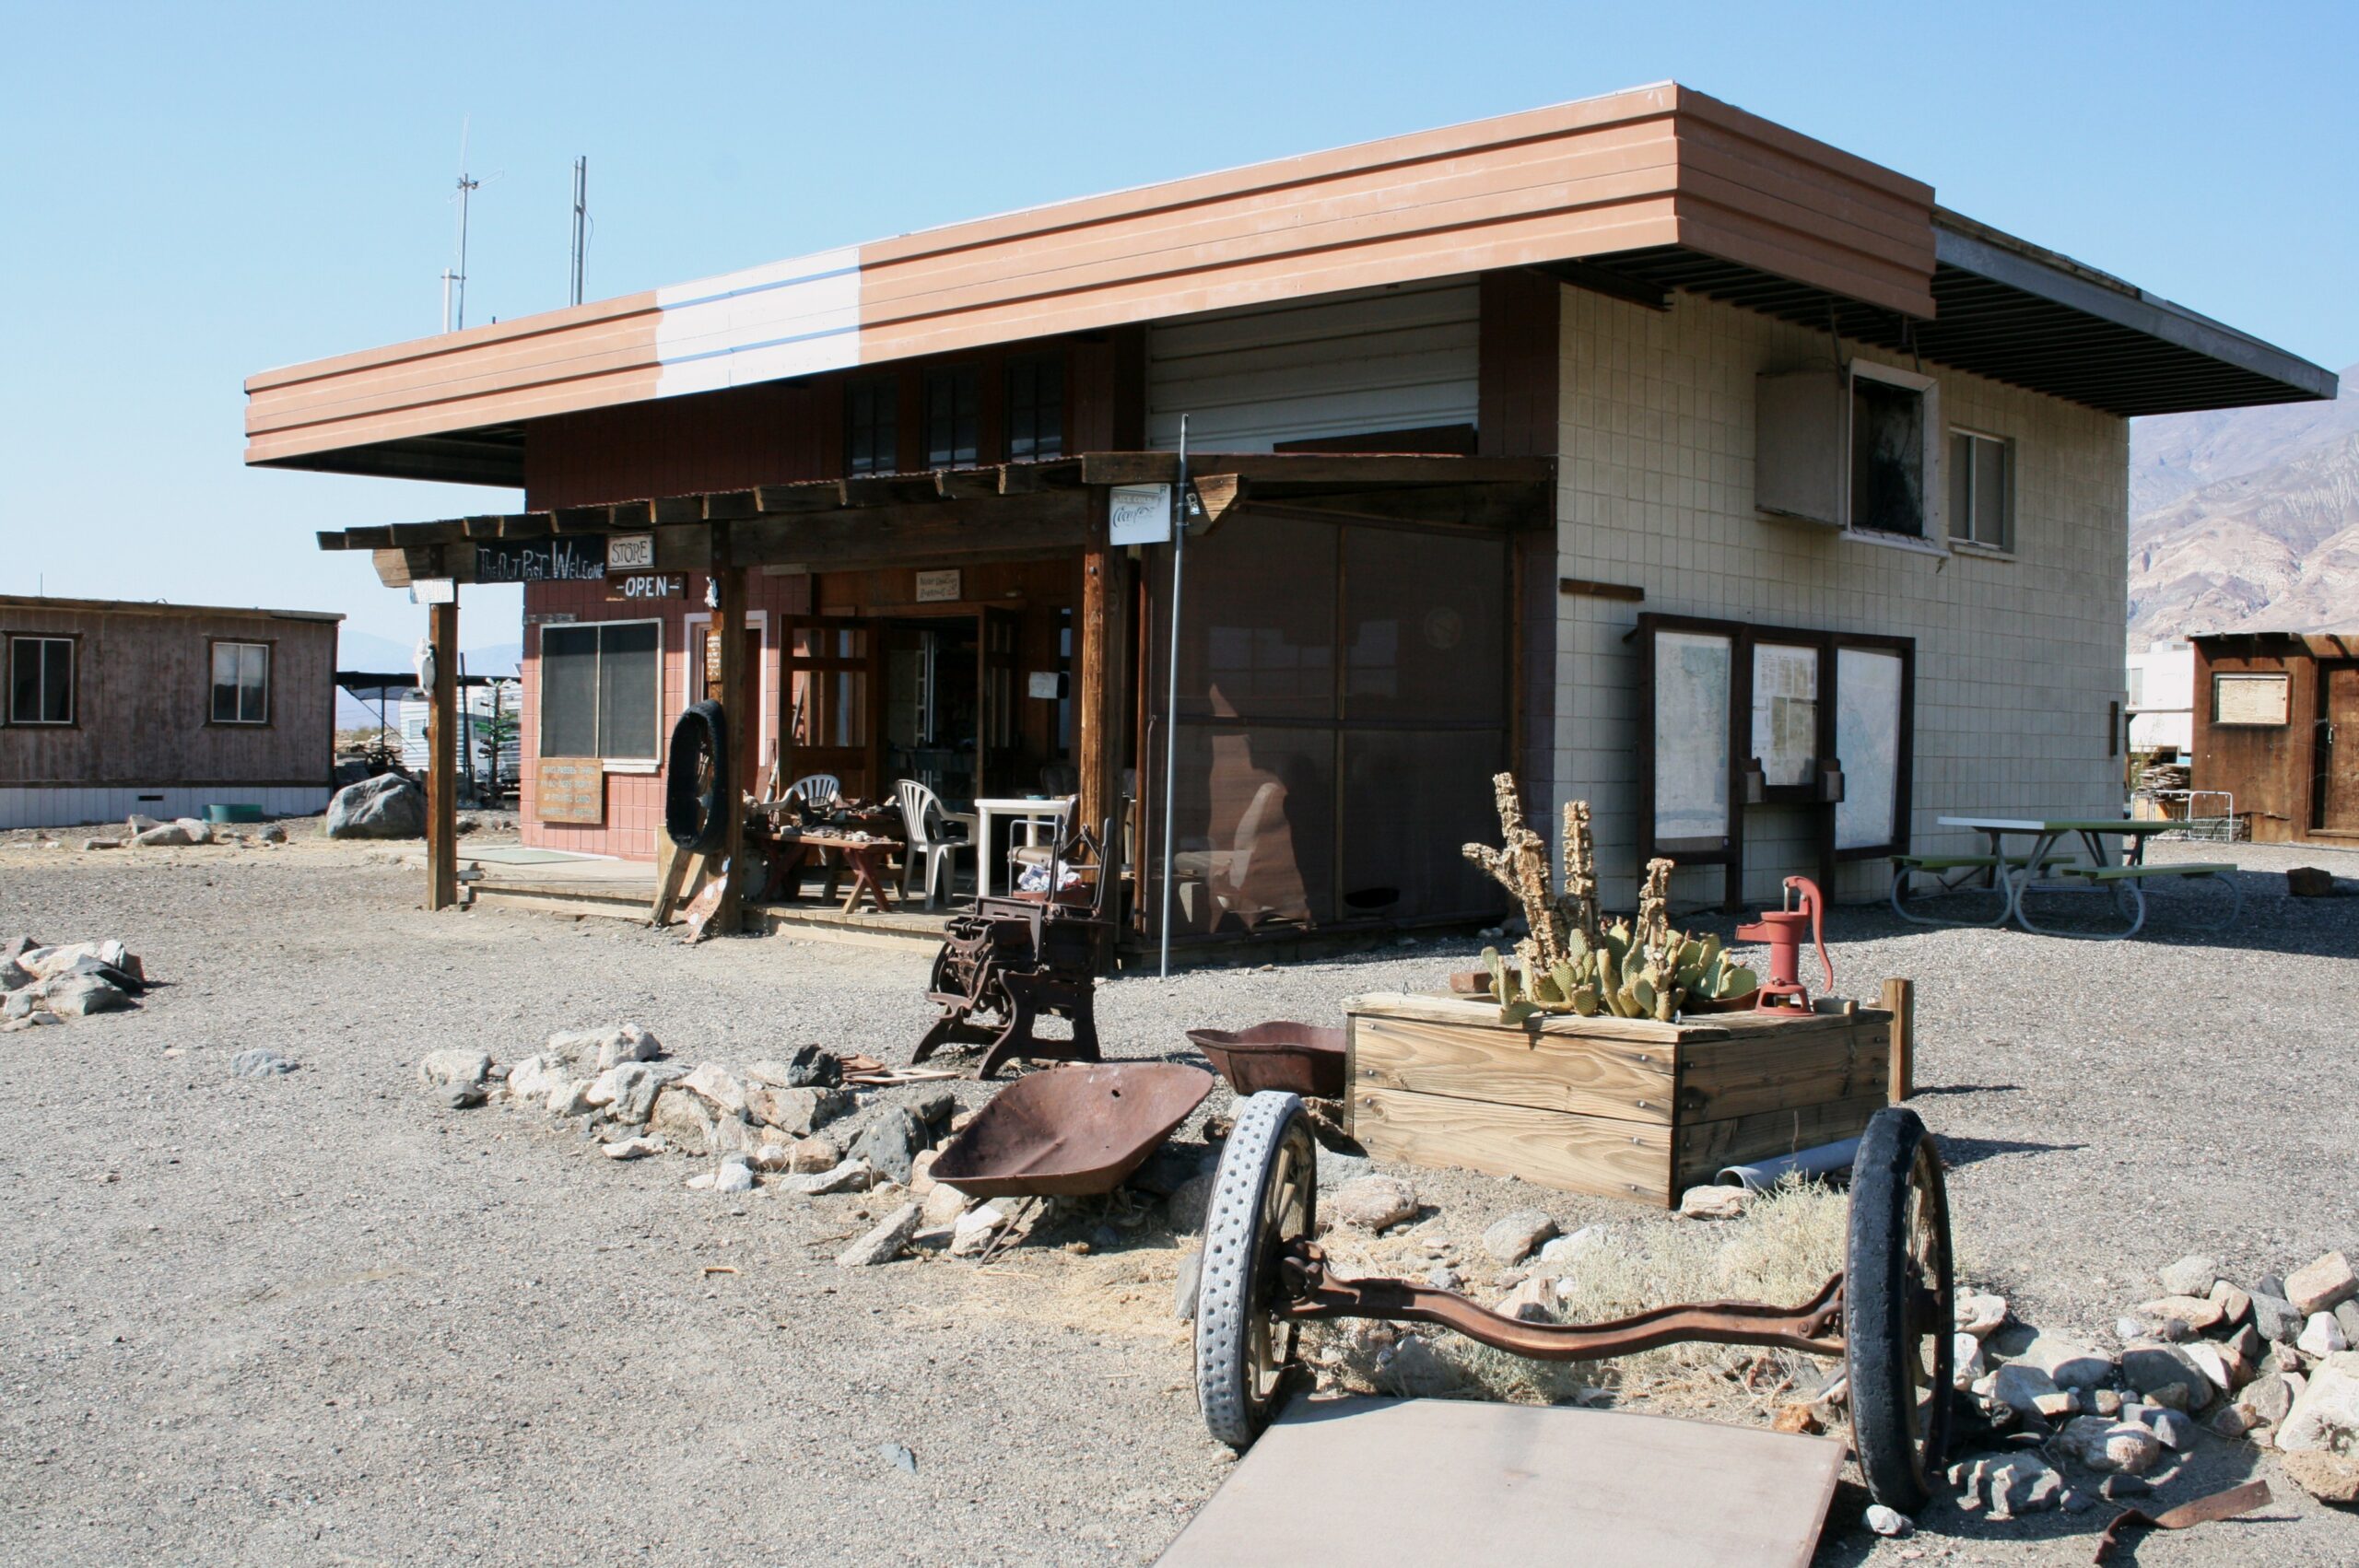 The Outpost general store in Ballarat, California